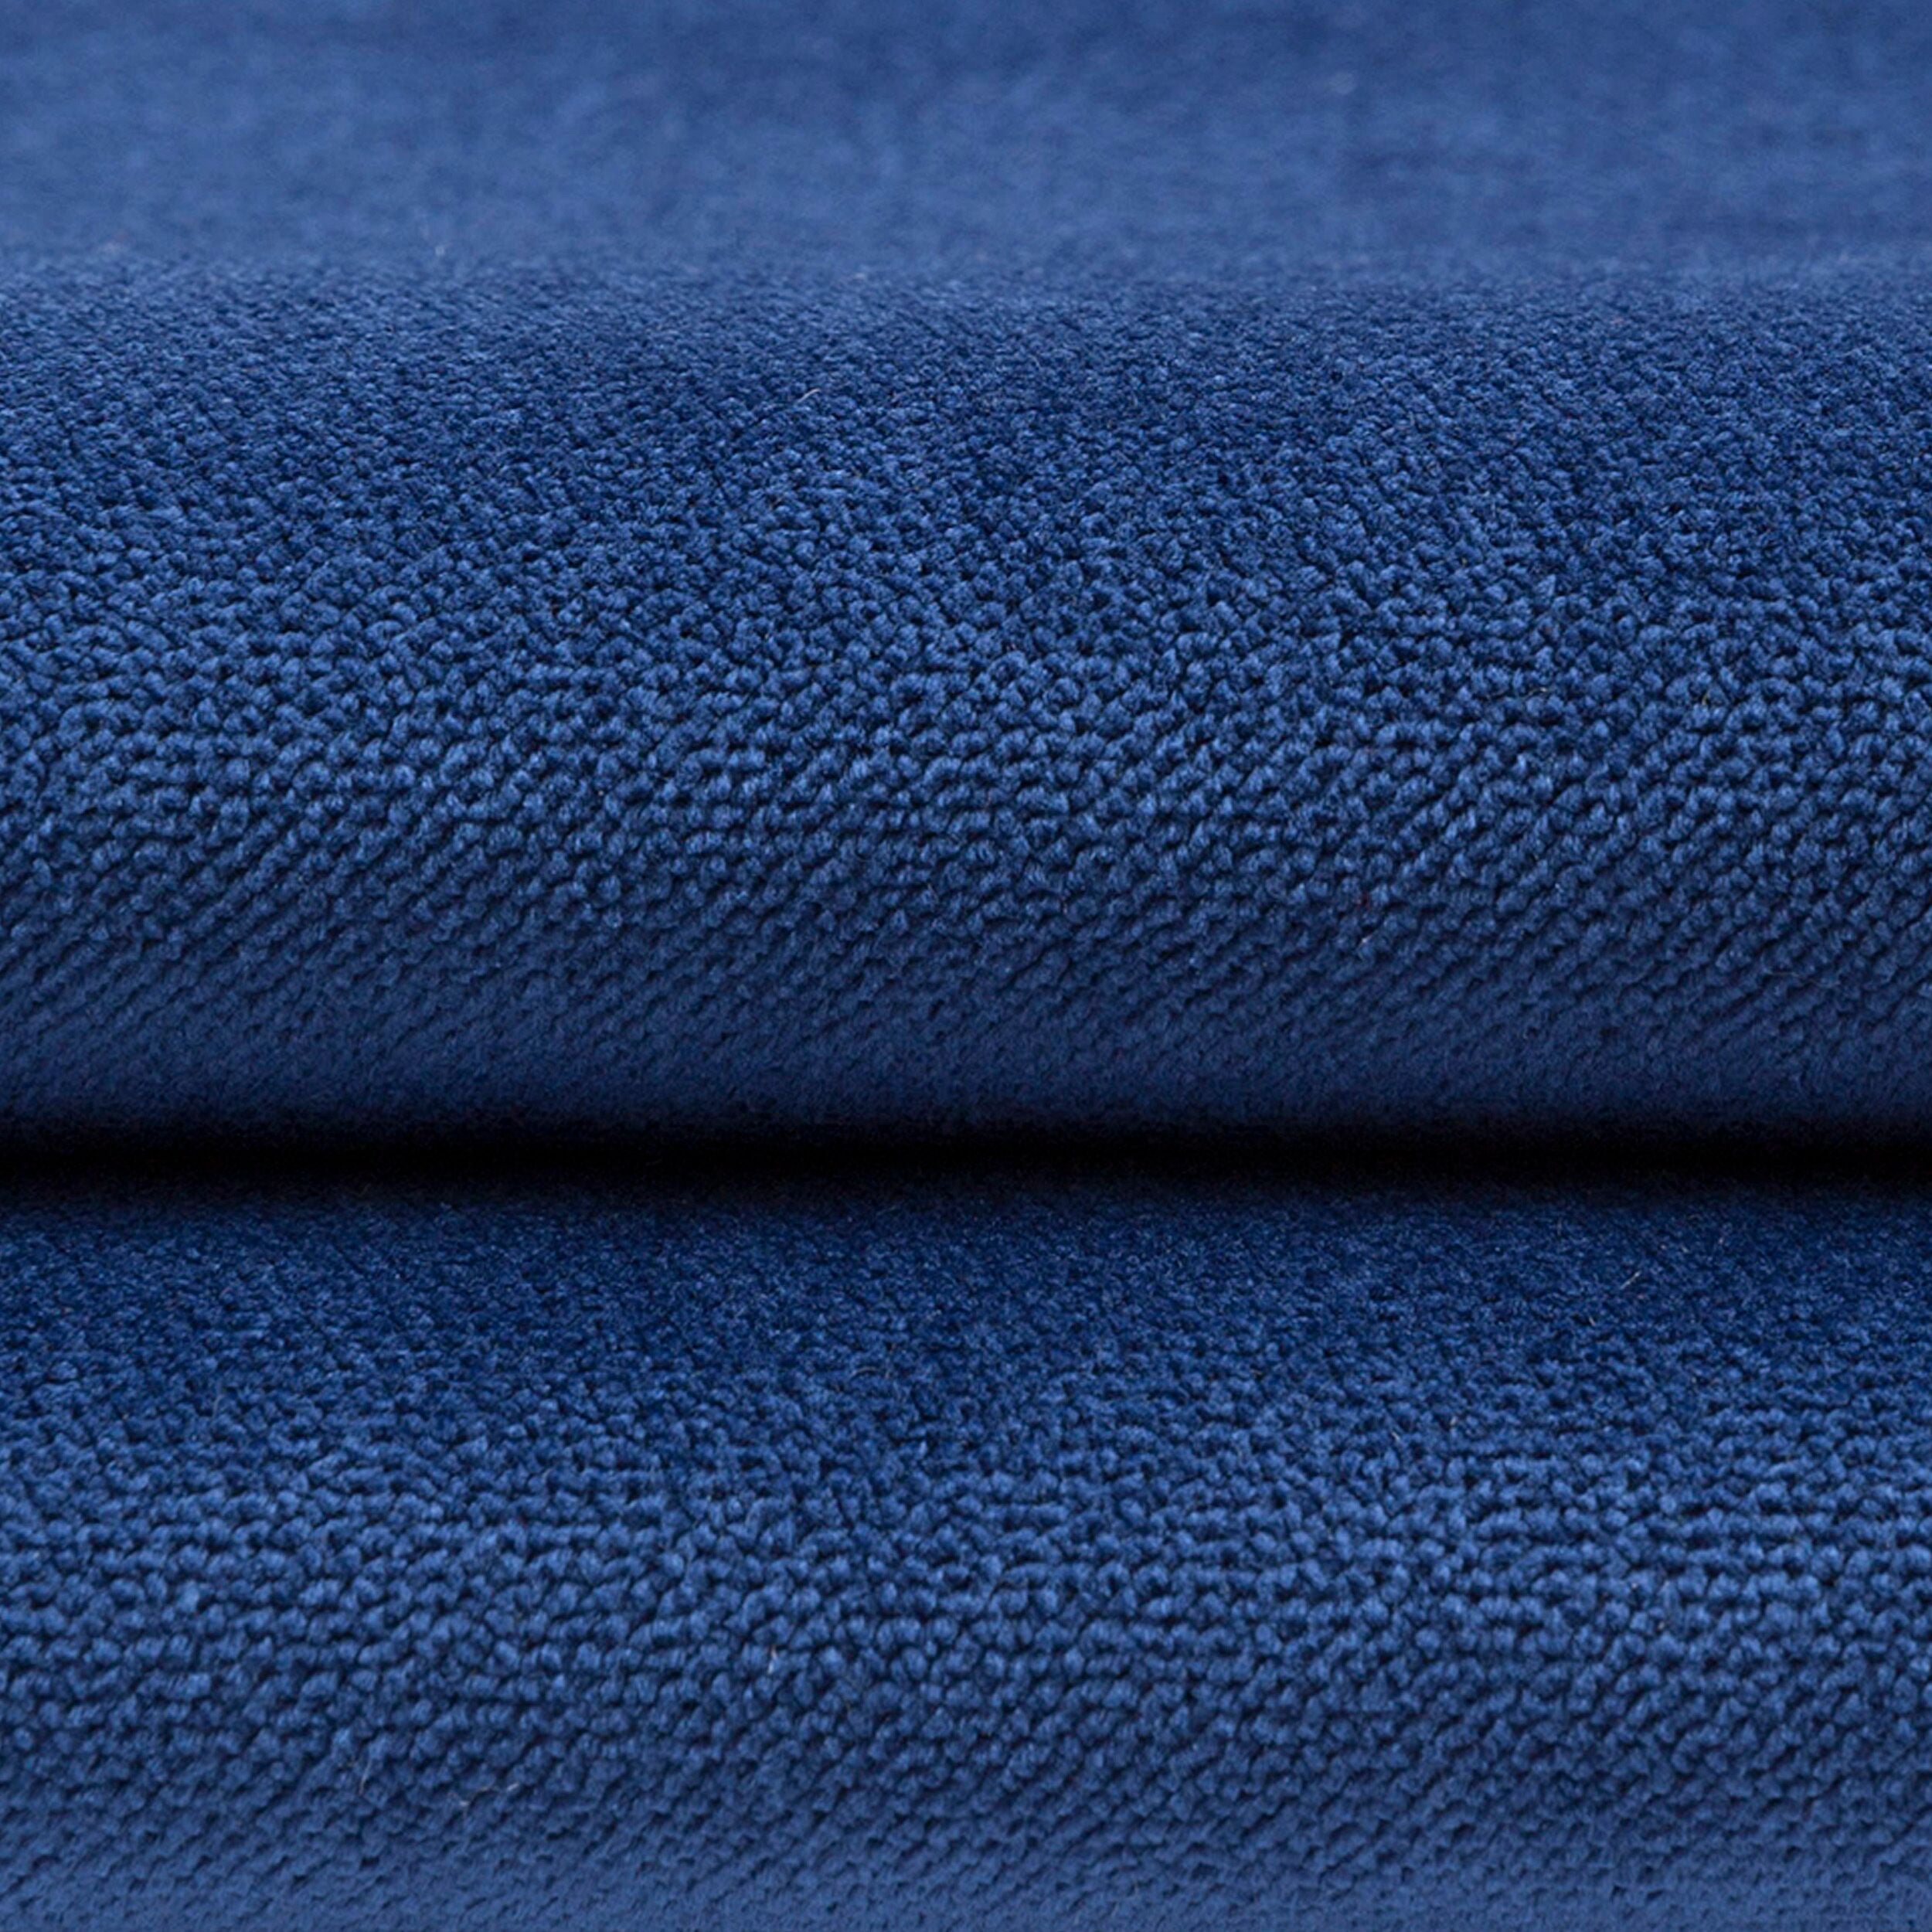 McAlister Textiles Matt Navy Blue Velvet 43cm x 43cm Cushion Sets Cushions and Covers 